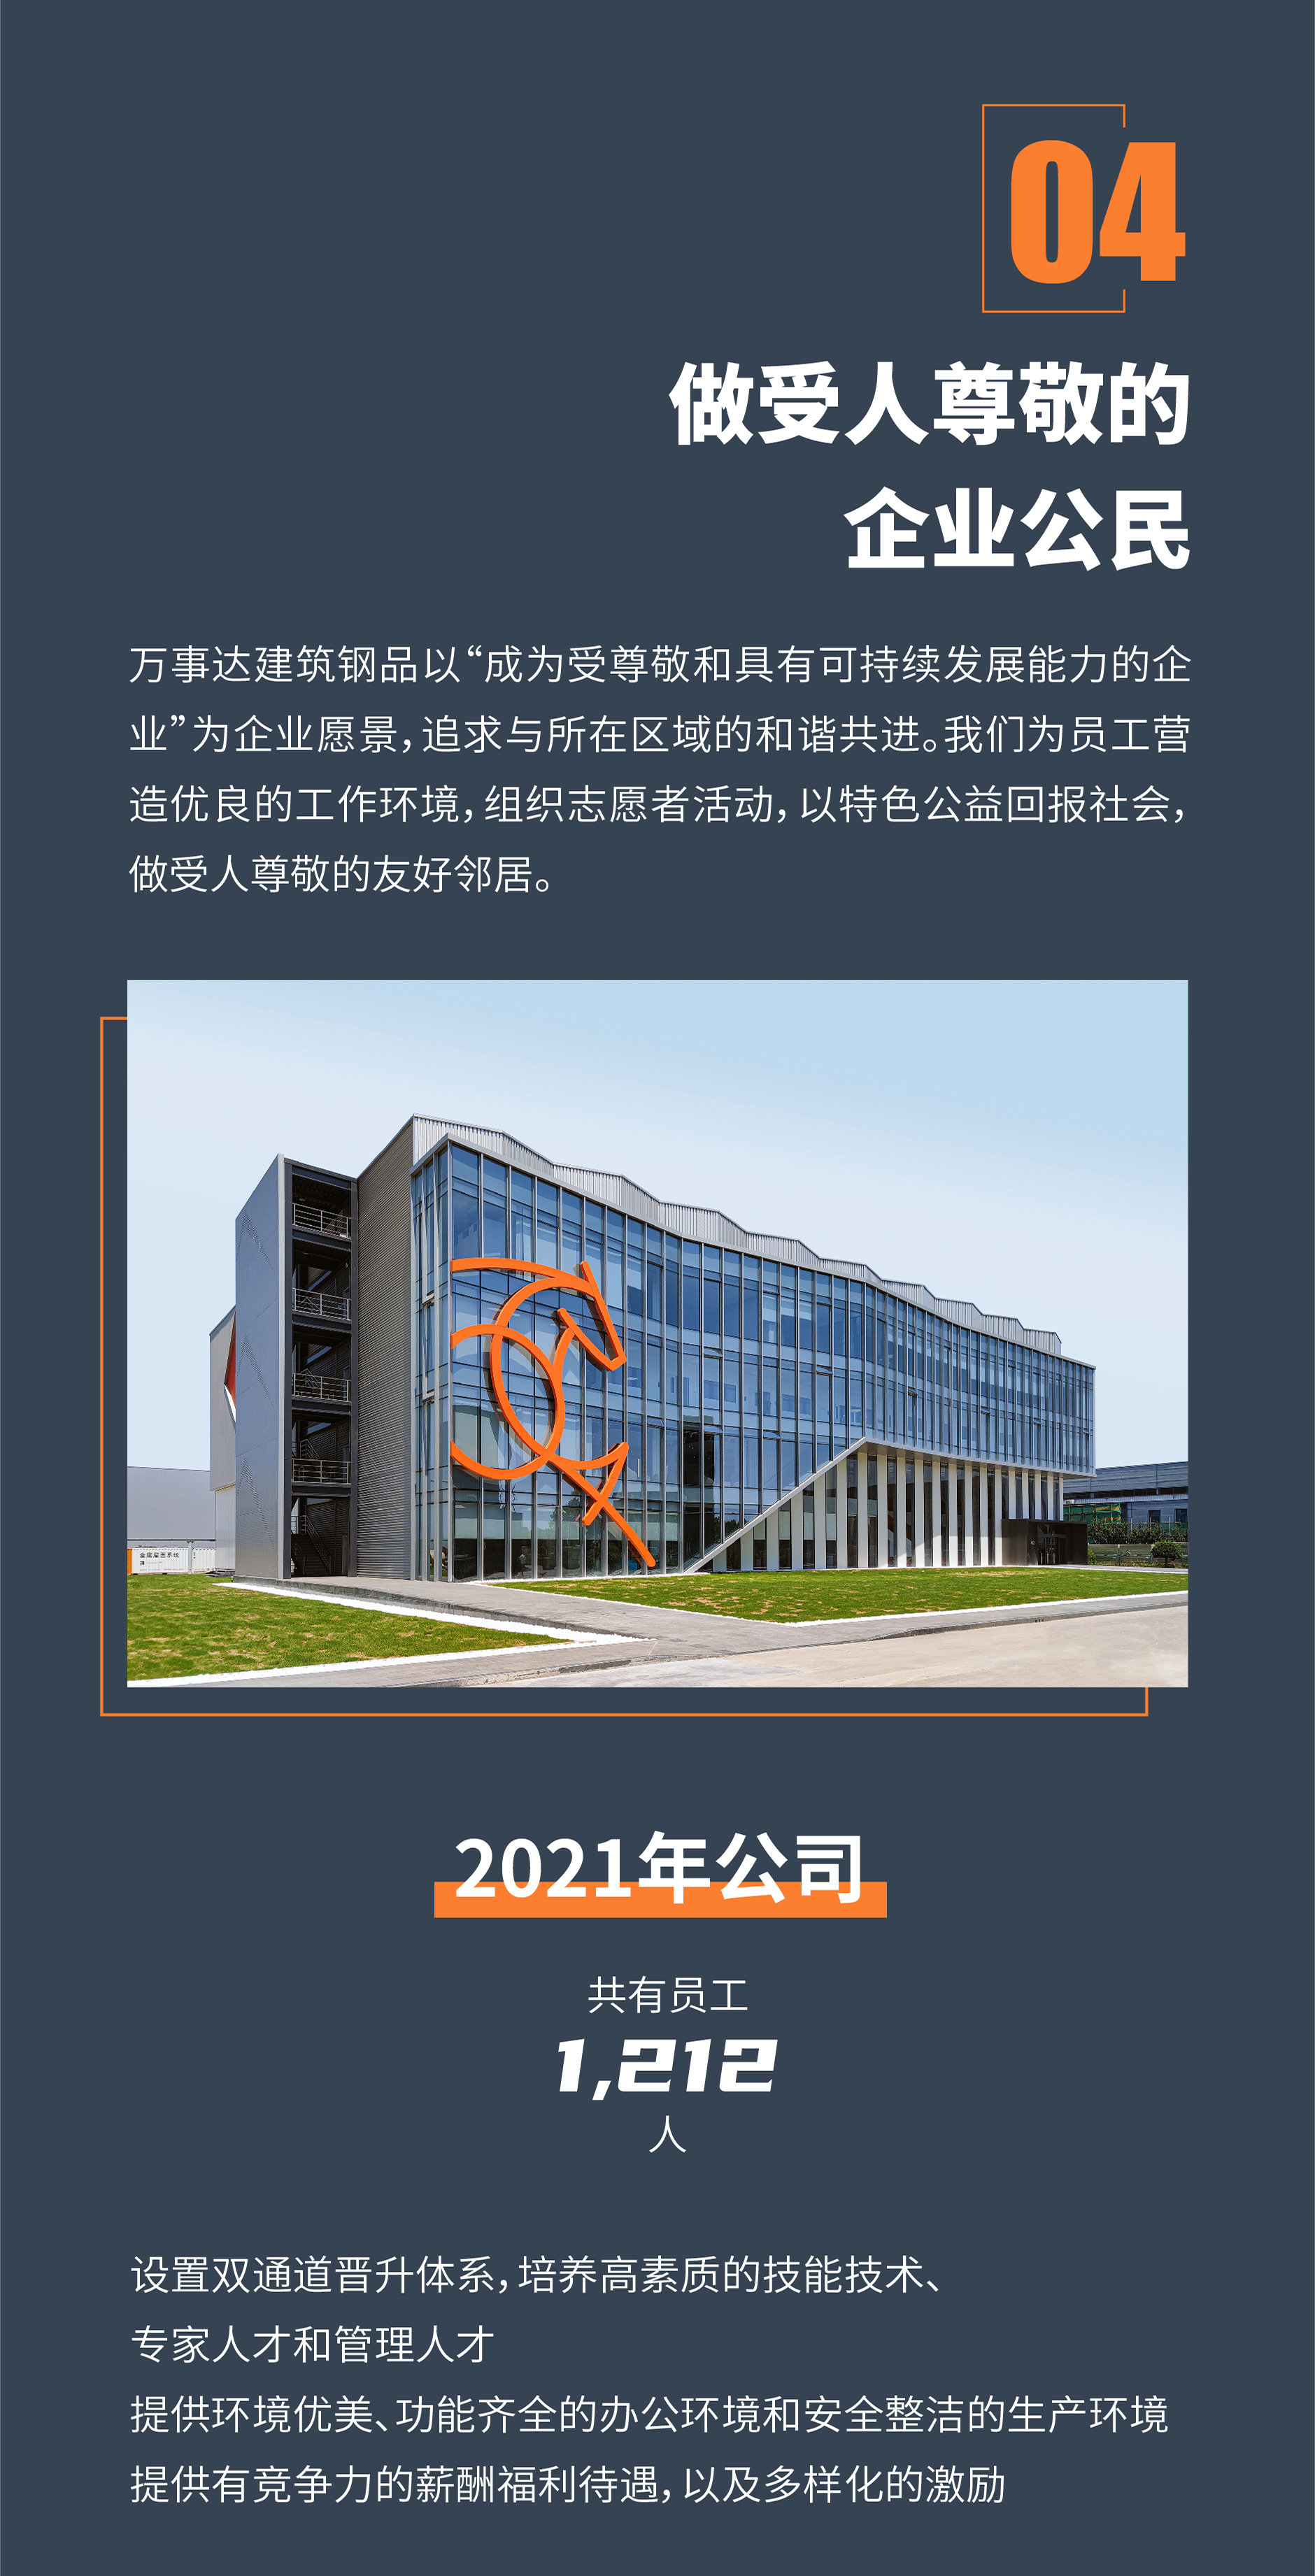 Wiskind Steel Building Co., Ltd.s first CSR report(图11)